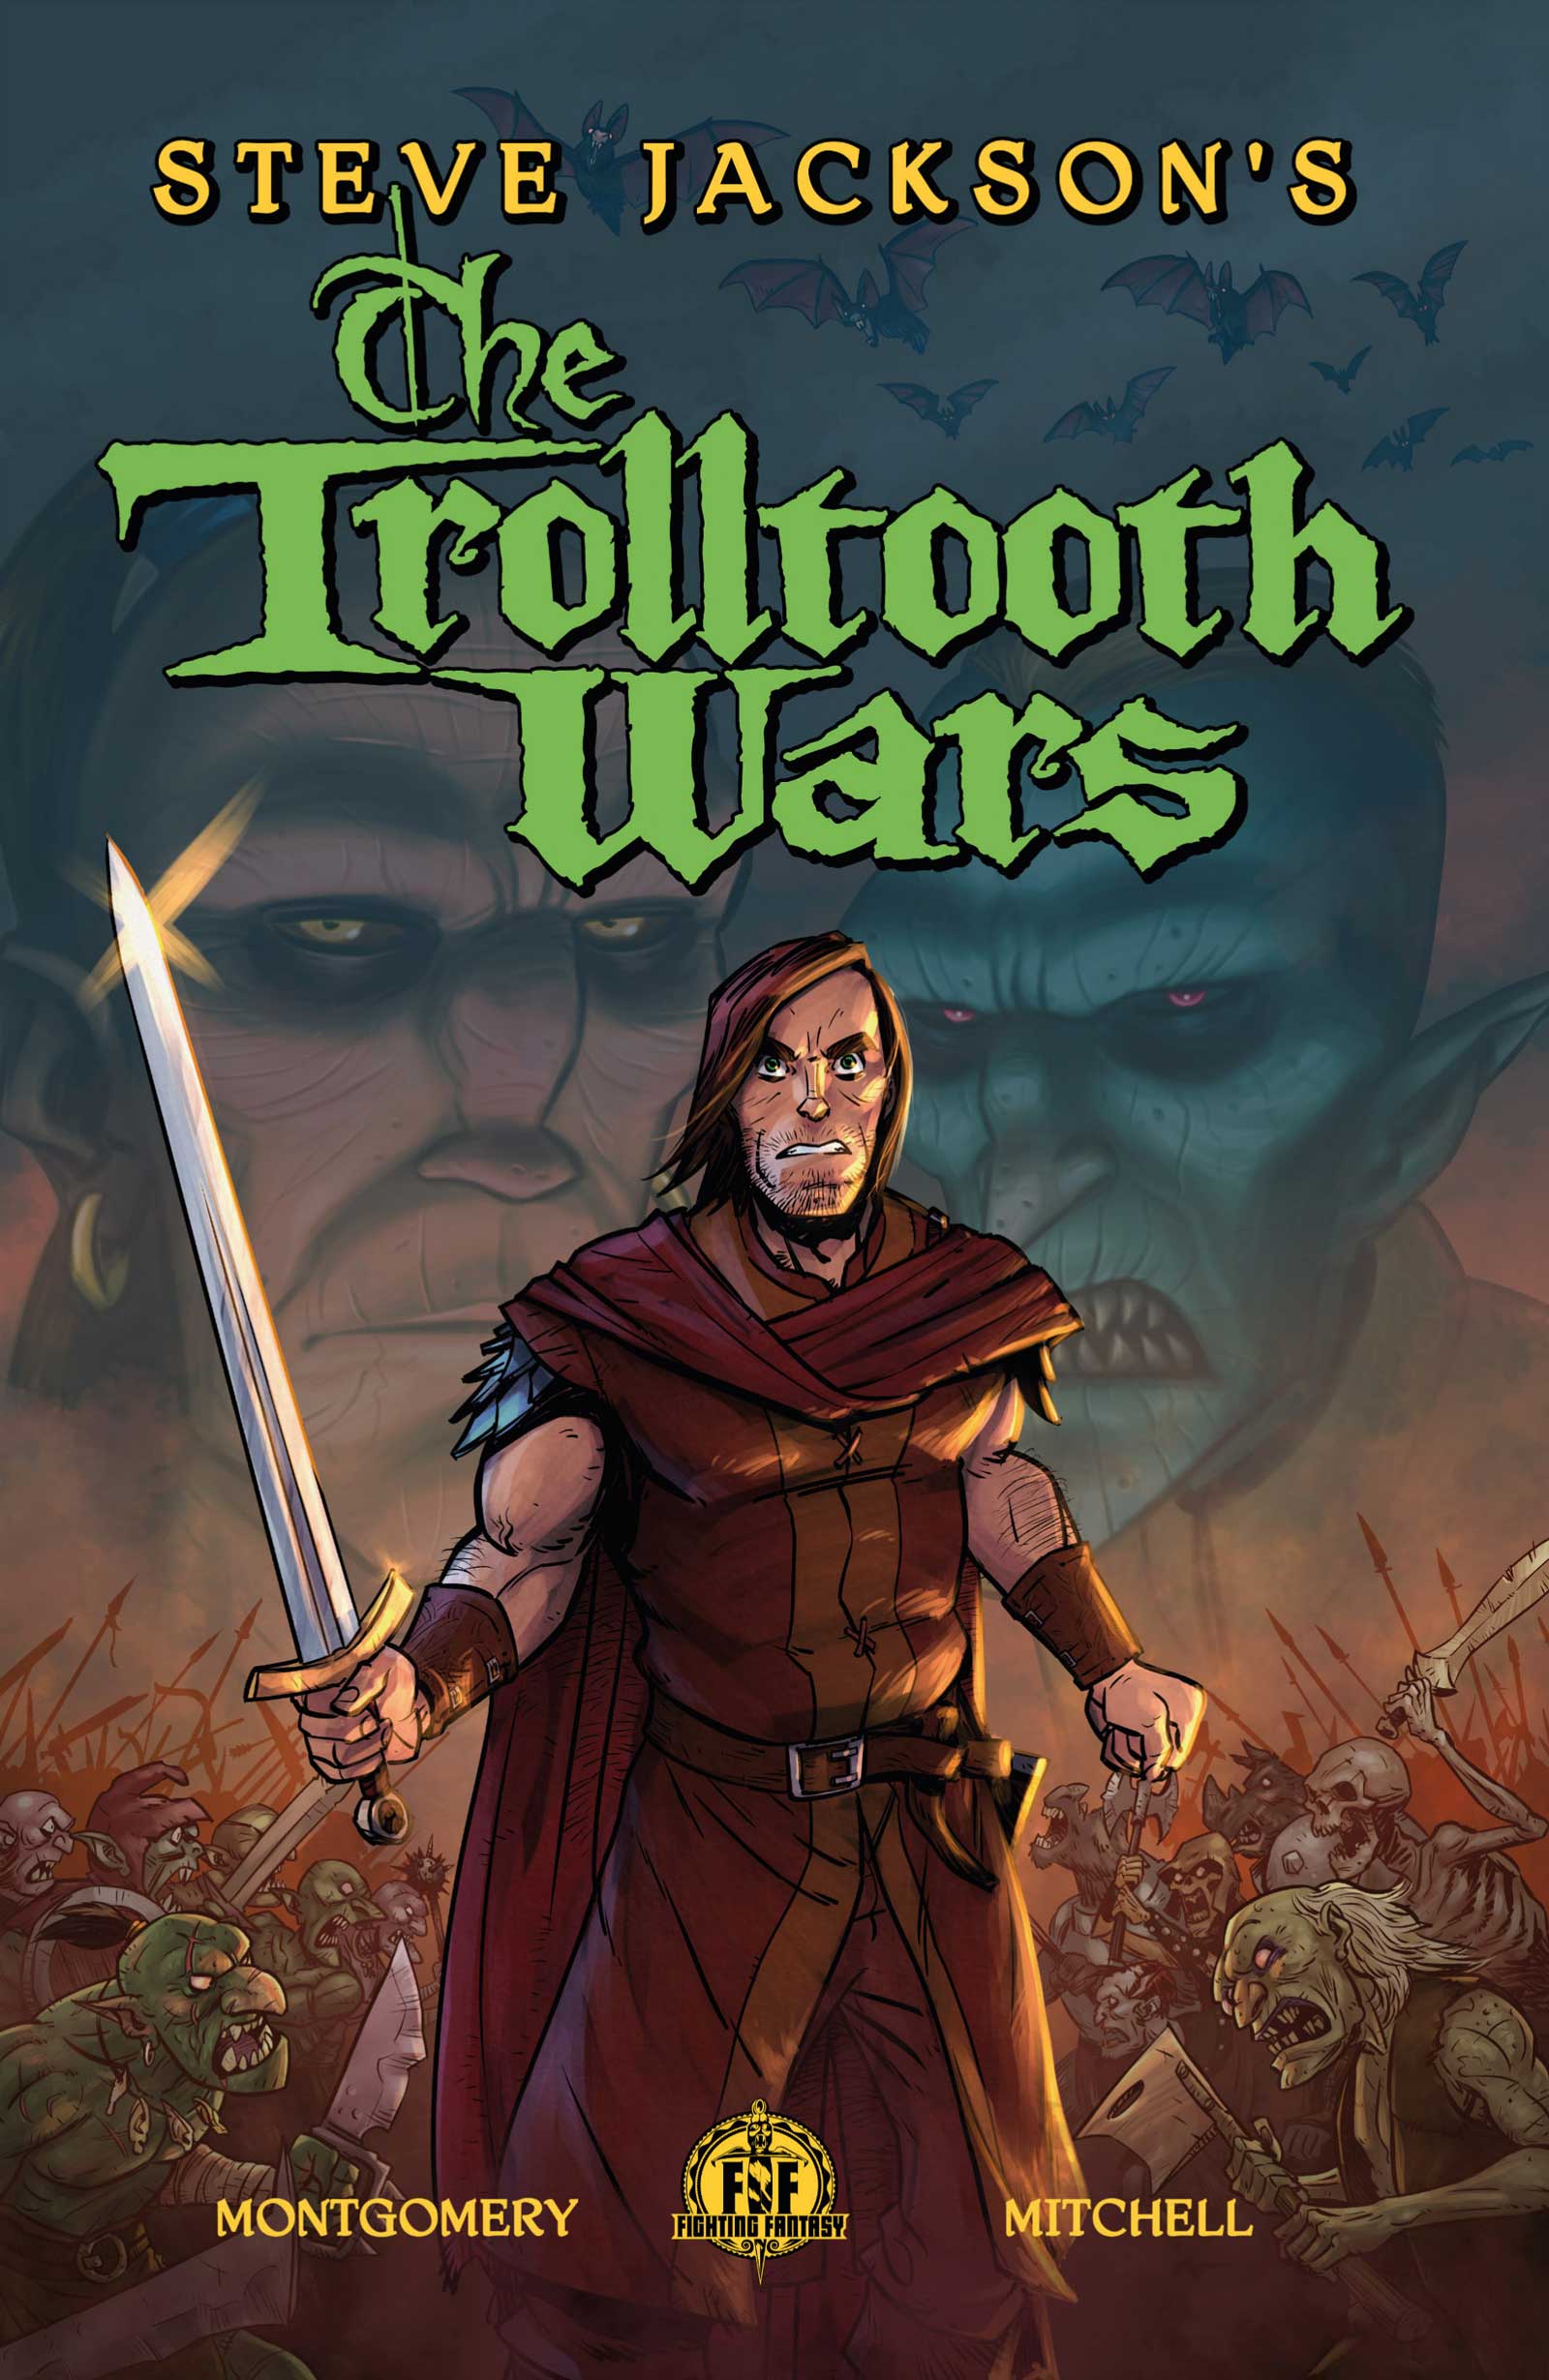 Steve Jackson's The Trolltooth Wars - Cover